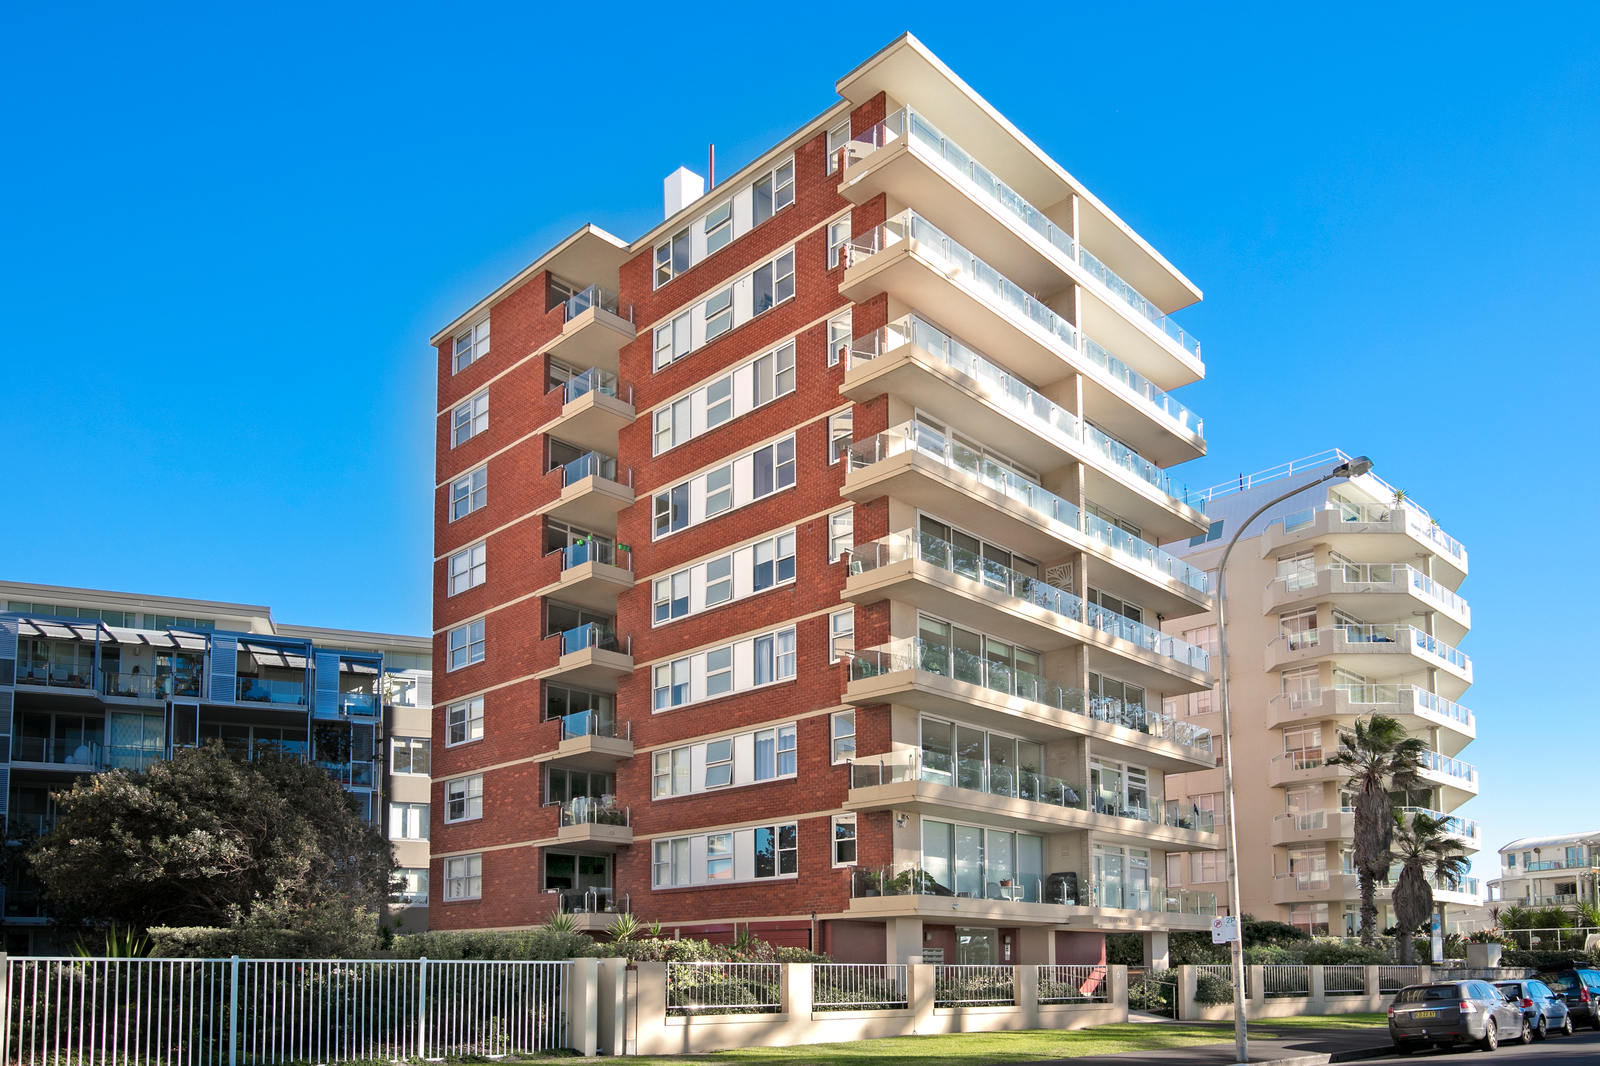 Unique Apartments For Sale Manly Sydney for Large Space